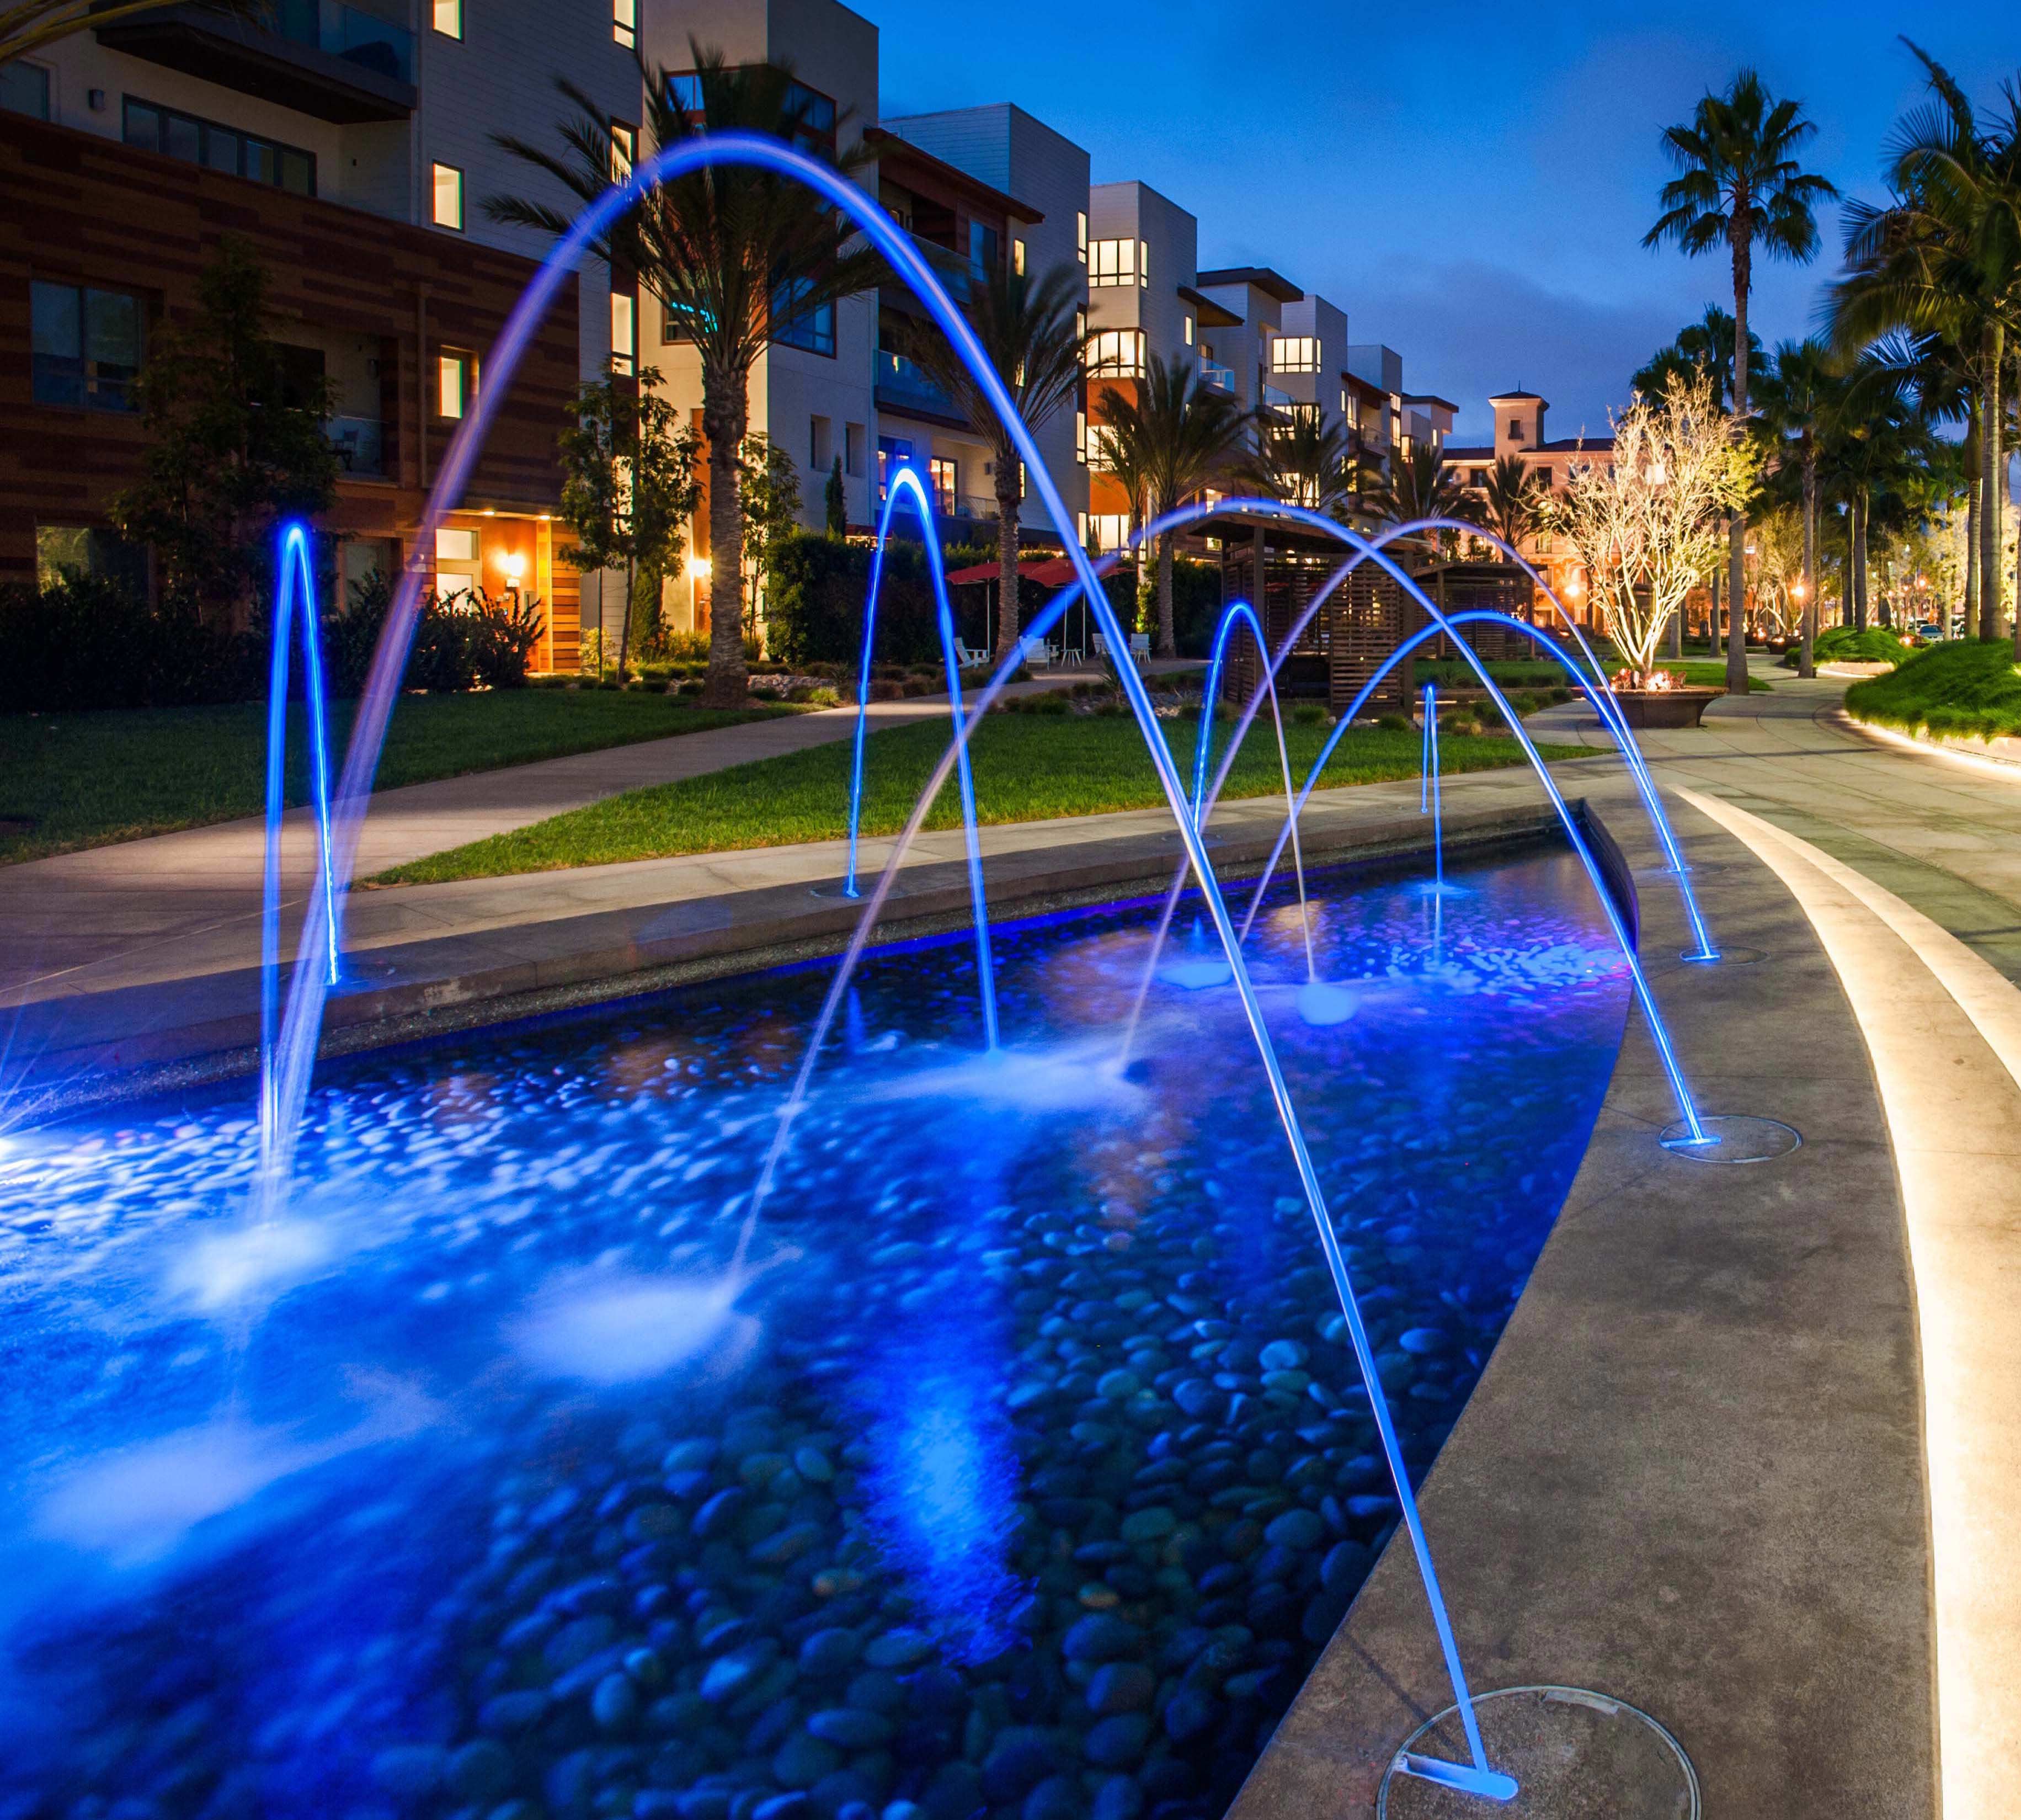 Community Development Water Spouts at night